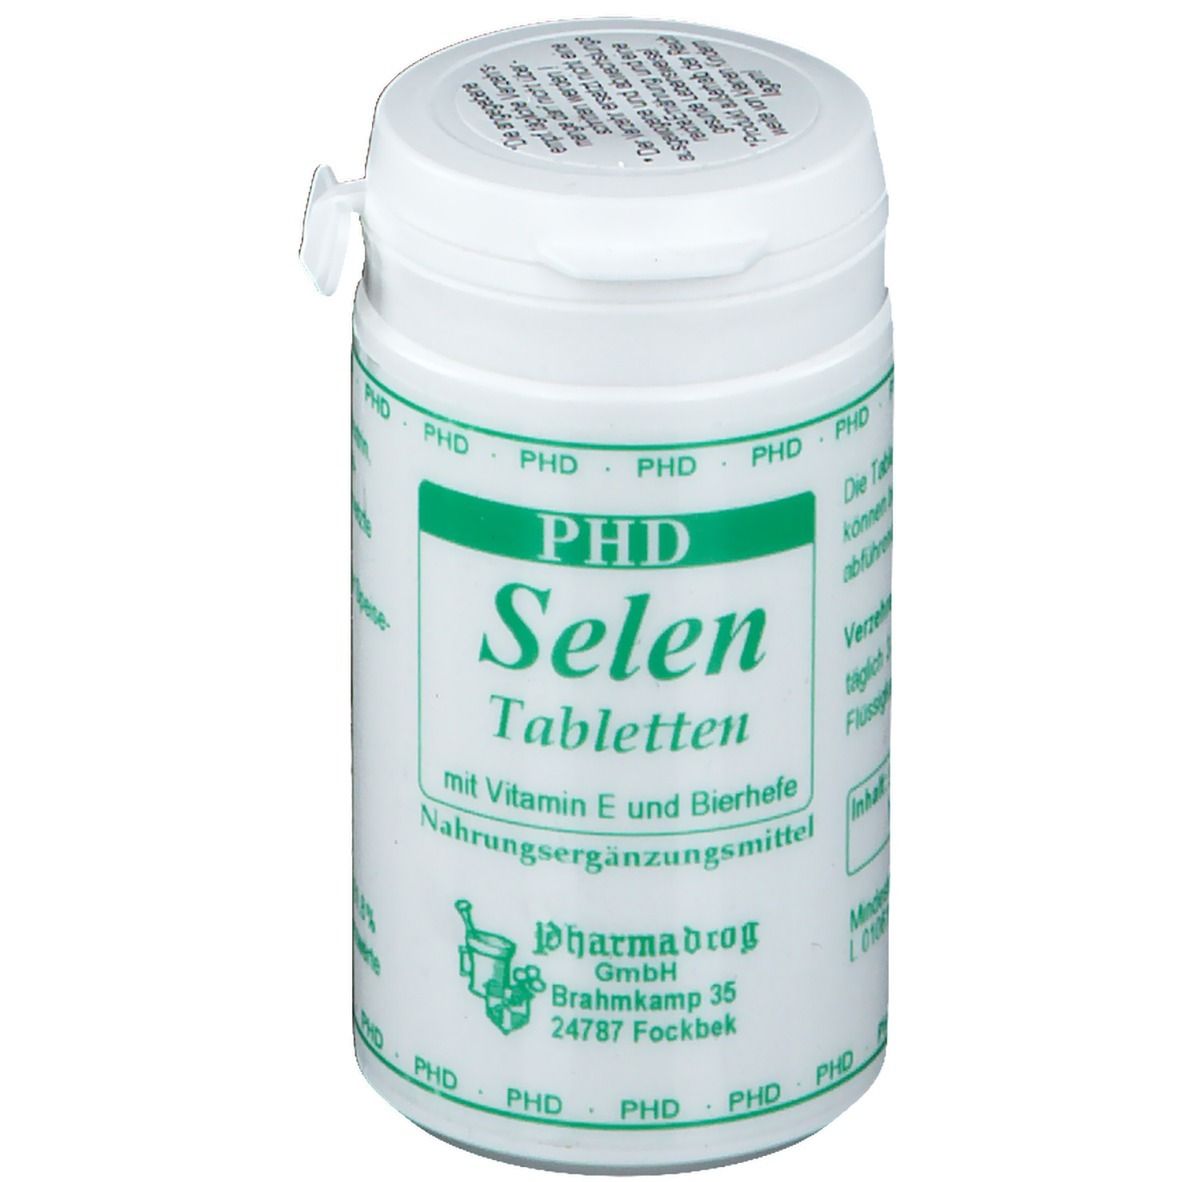 Hefe Selen Tabletten